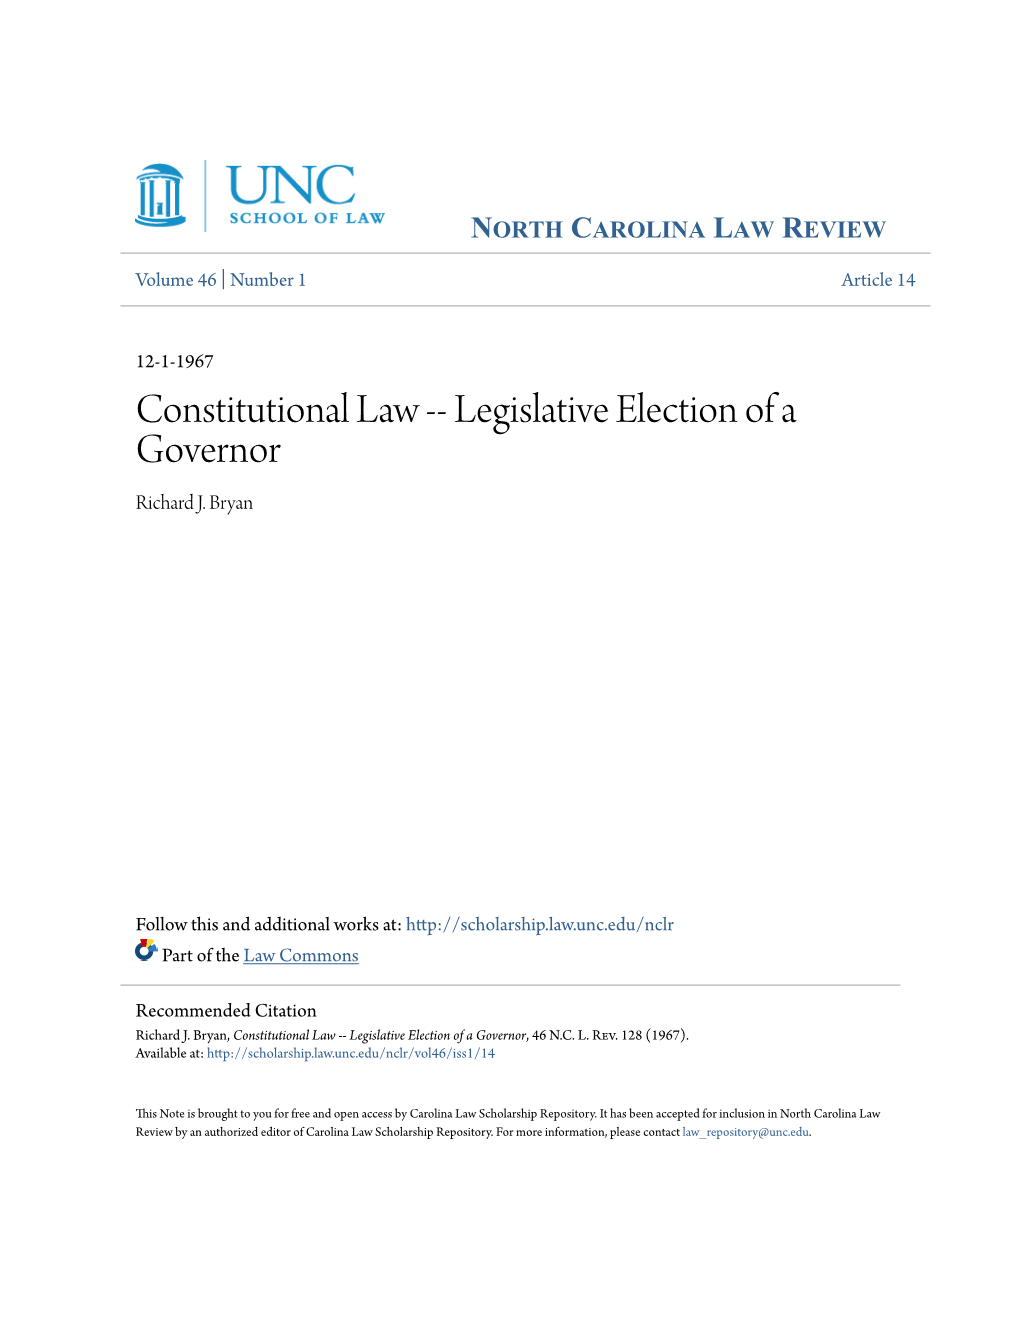 Constitutional Law -- Legislative Election of a Governor Richard J